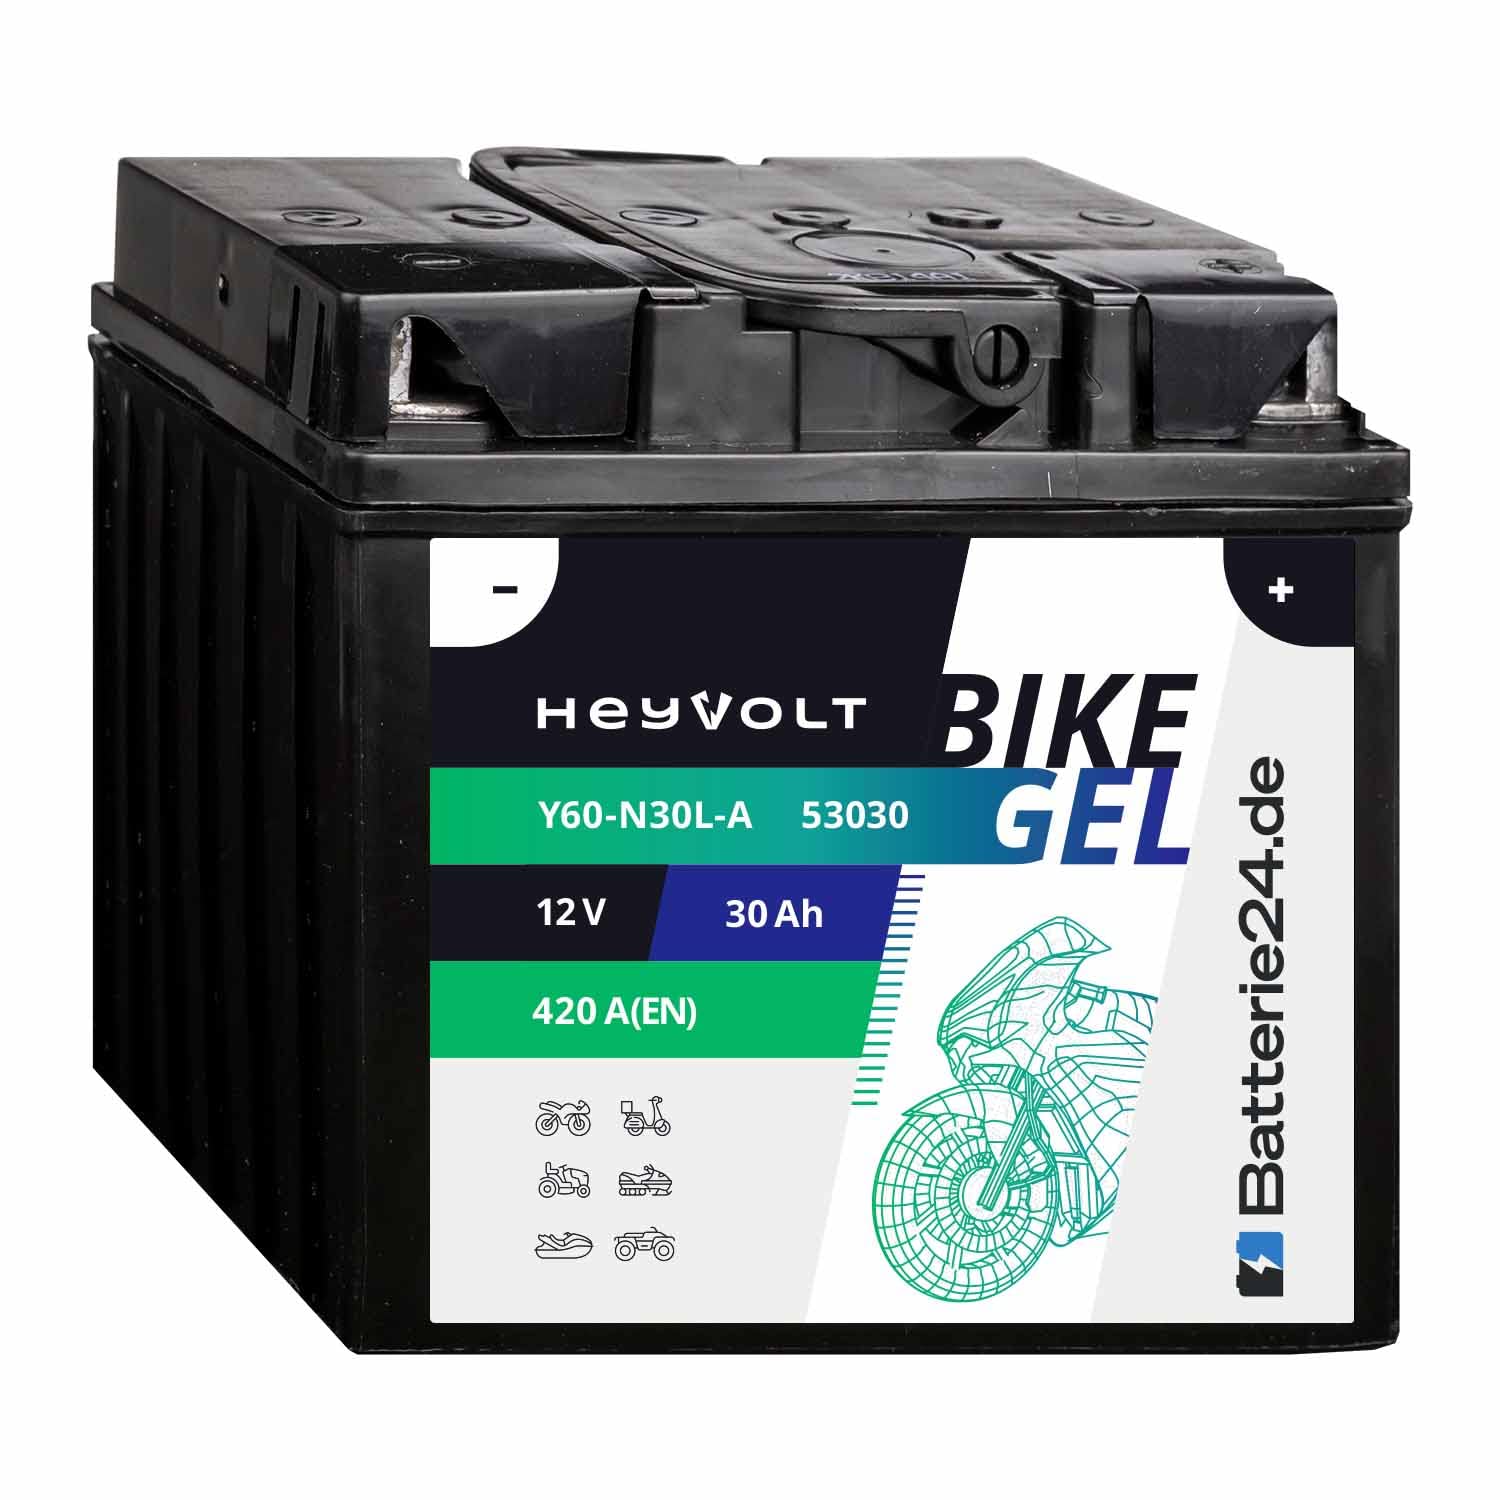 HeyVolt GEL Motorradbatterie 12V 30Ah Y60-N30L-A C60-N30L-A 53030 C60-N30L-A von Batterie24.de